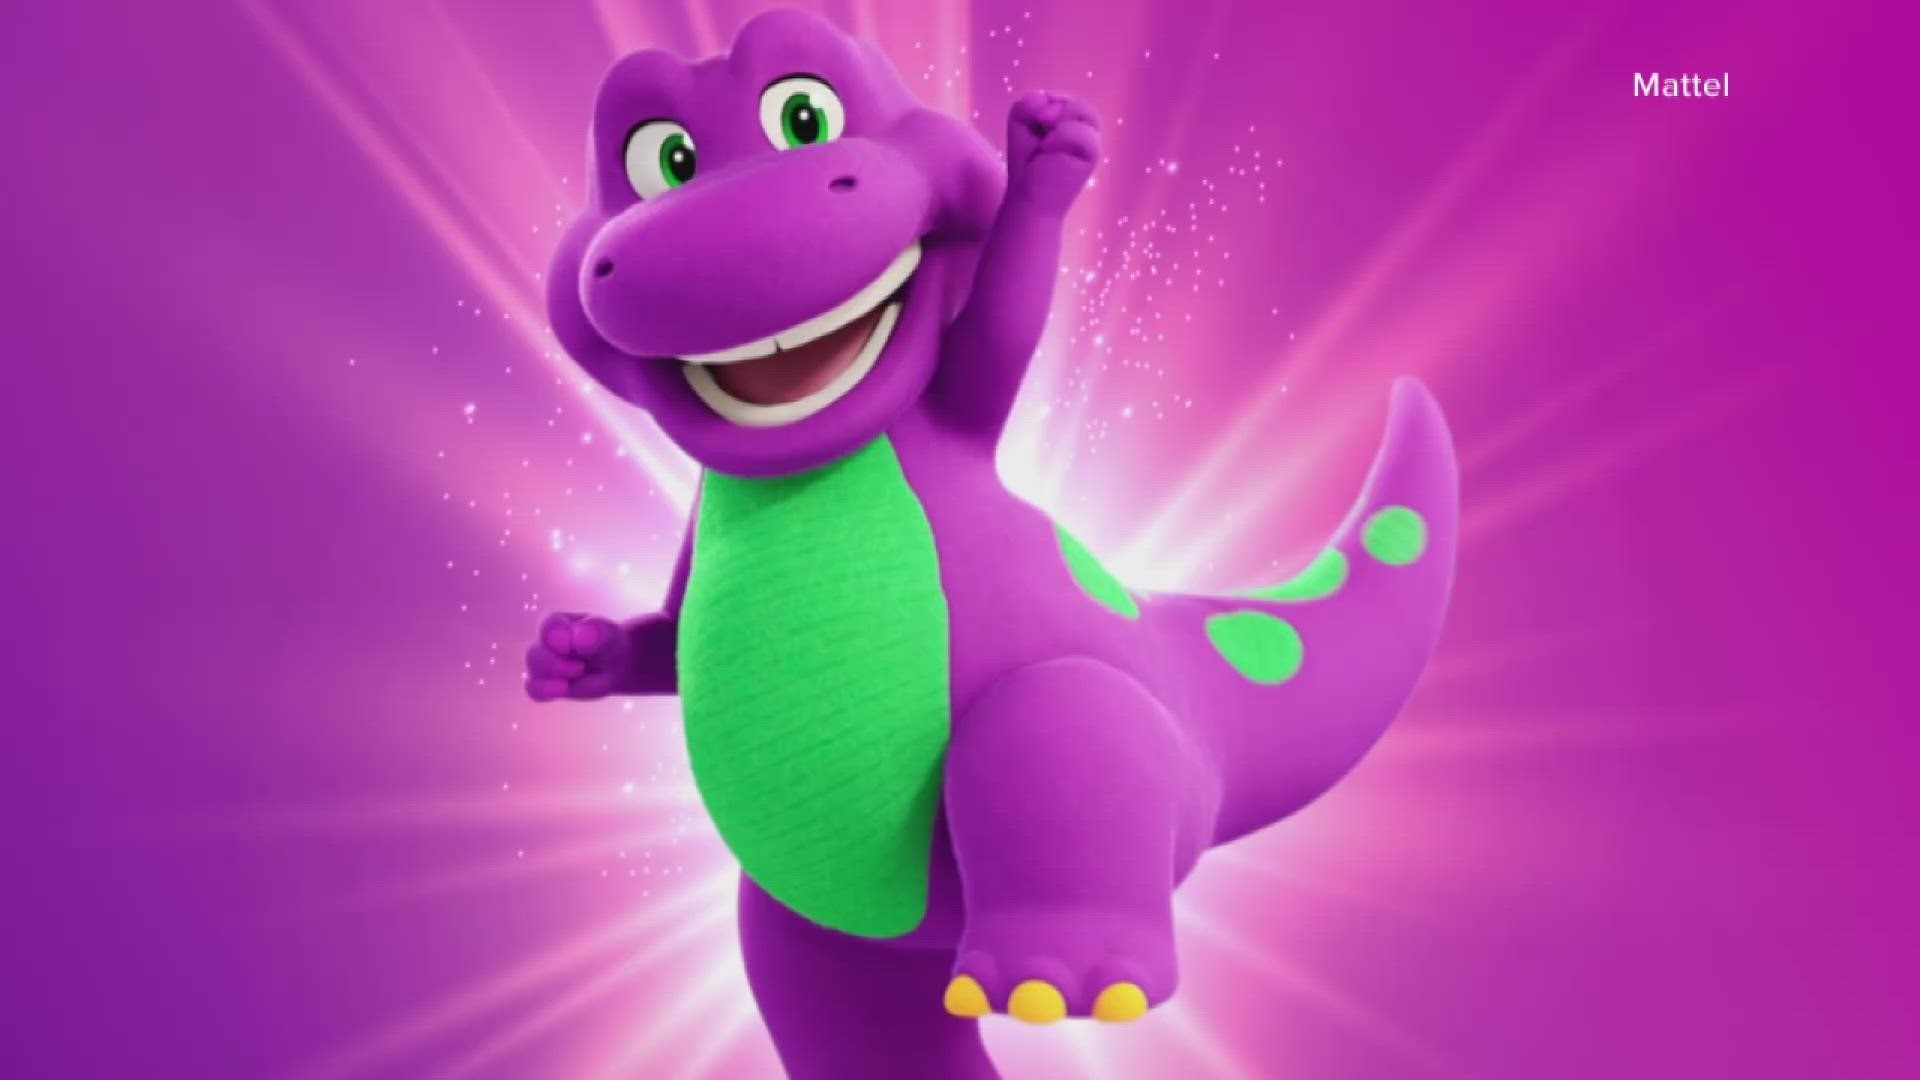 Mattel has announced plans to bring back the purple singing dinosaur Barney.